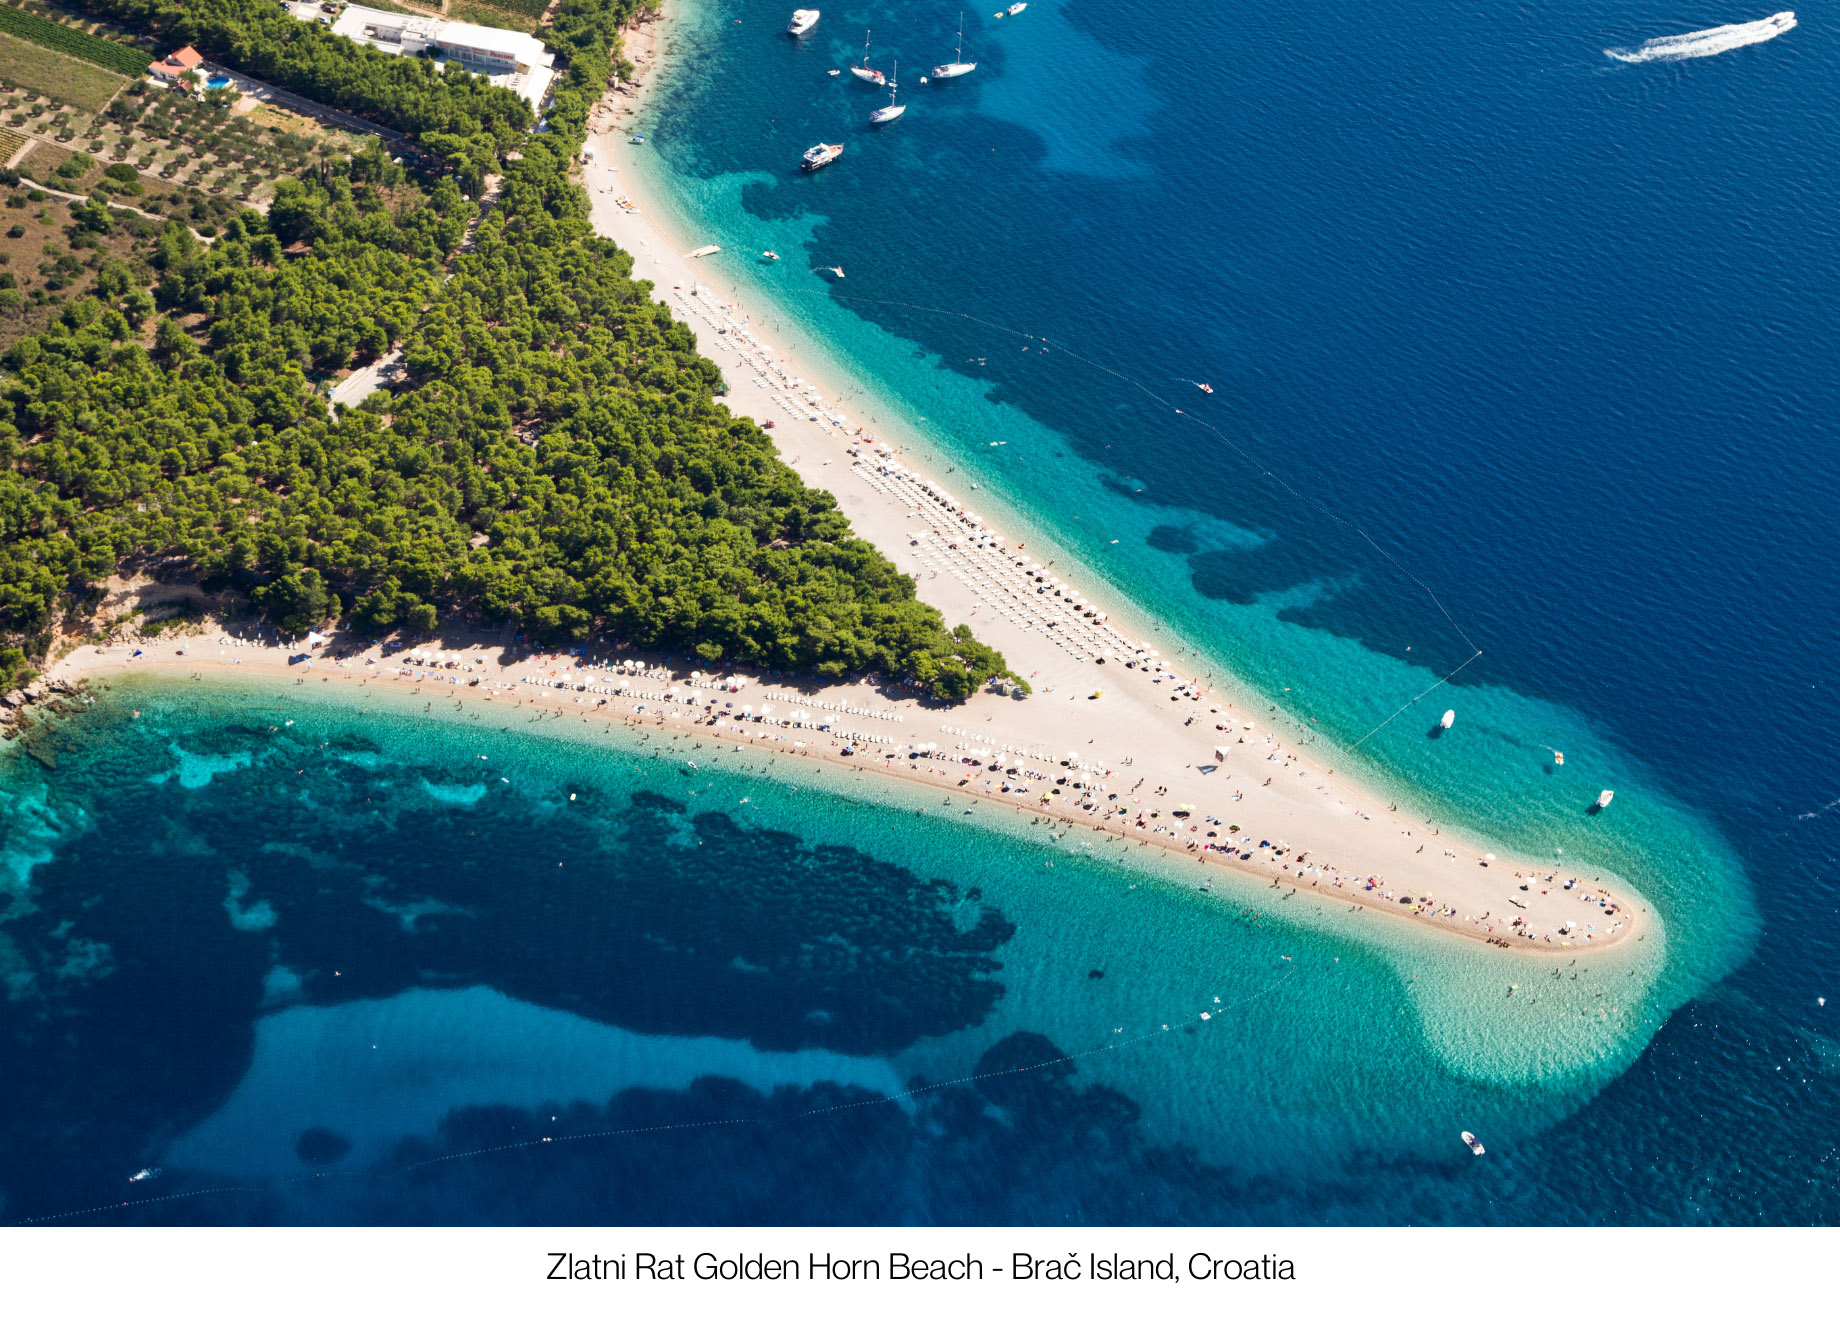 Explore Popular Croatian Destinations Without the Crowds by Yacht - Zlatni Rat Golden Horn Beach - Brac Island, Croatia